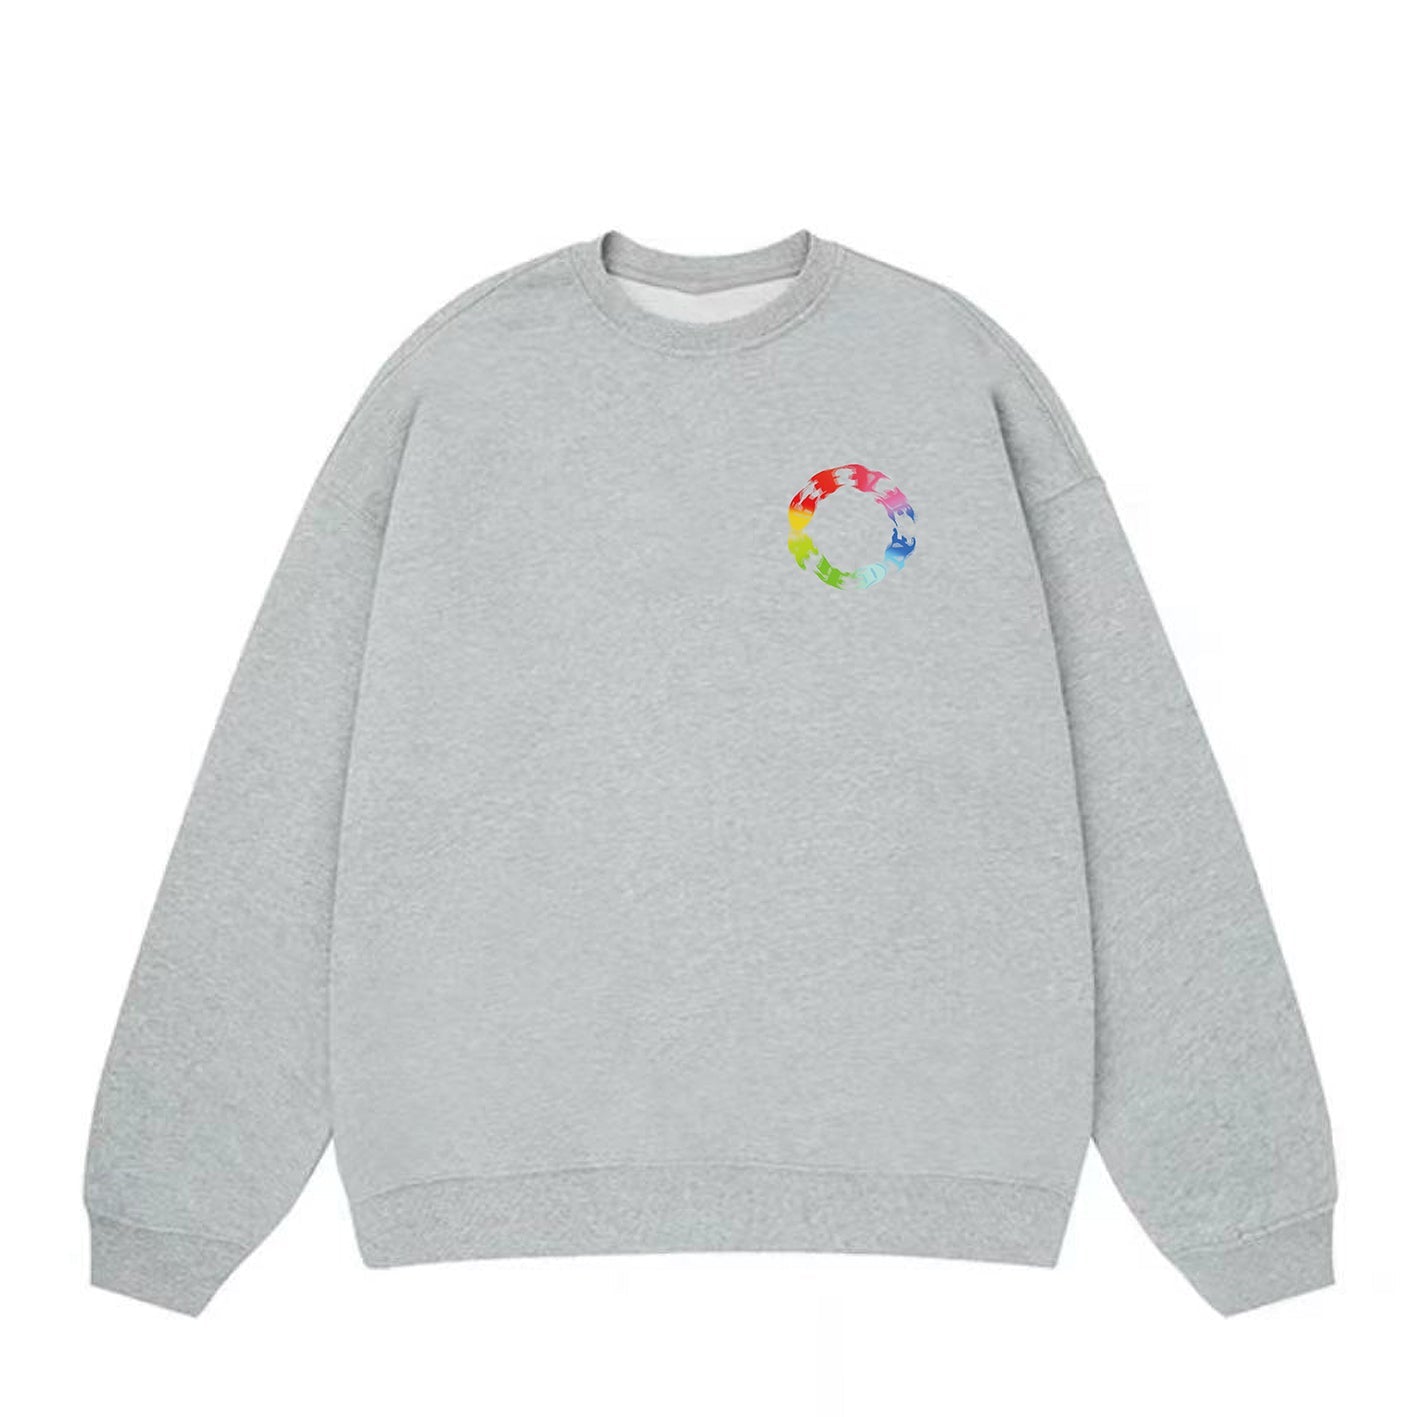 Circle Print Sweatshirt